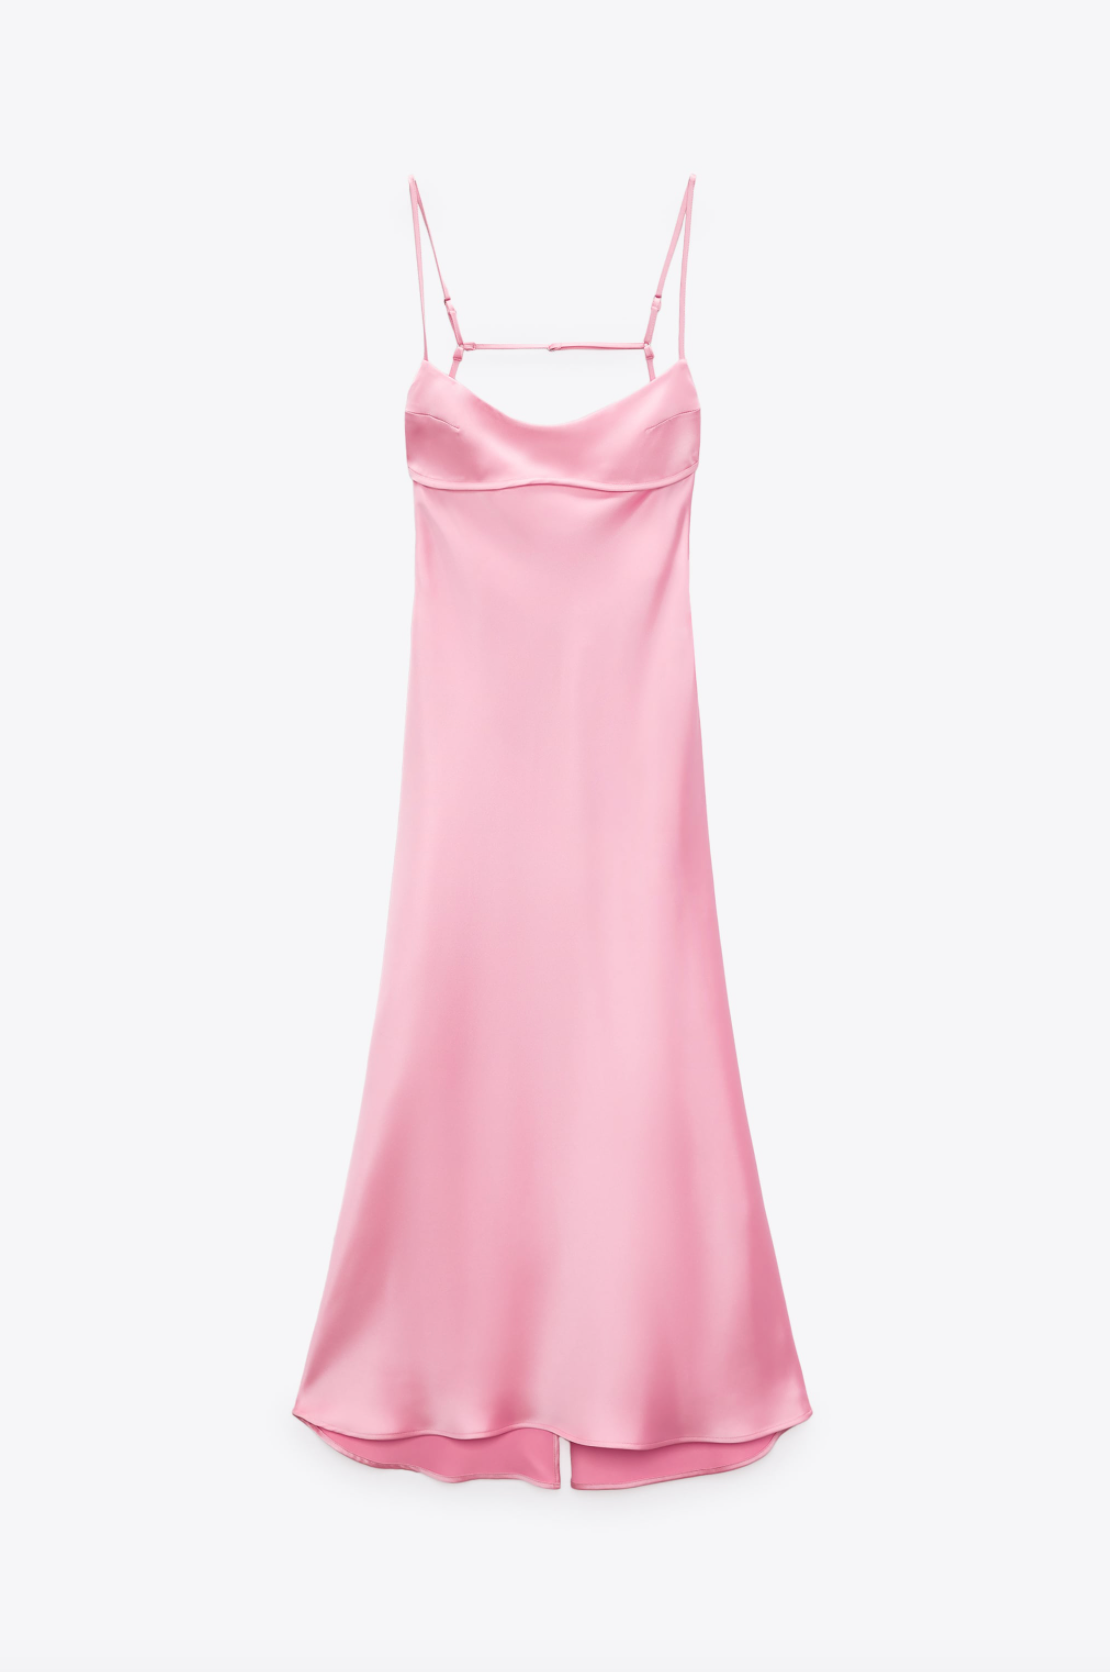 A $60 Pink Zara Satin Slip Dress Is ...